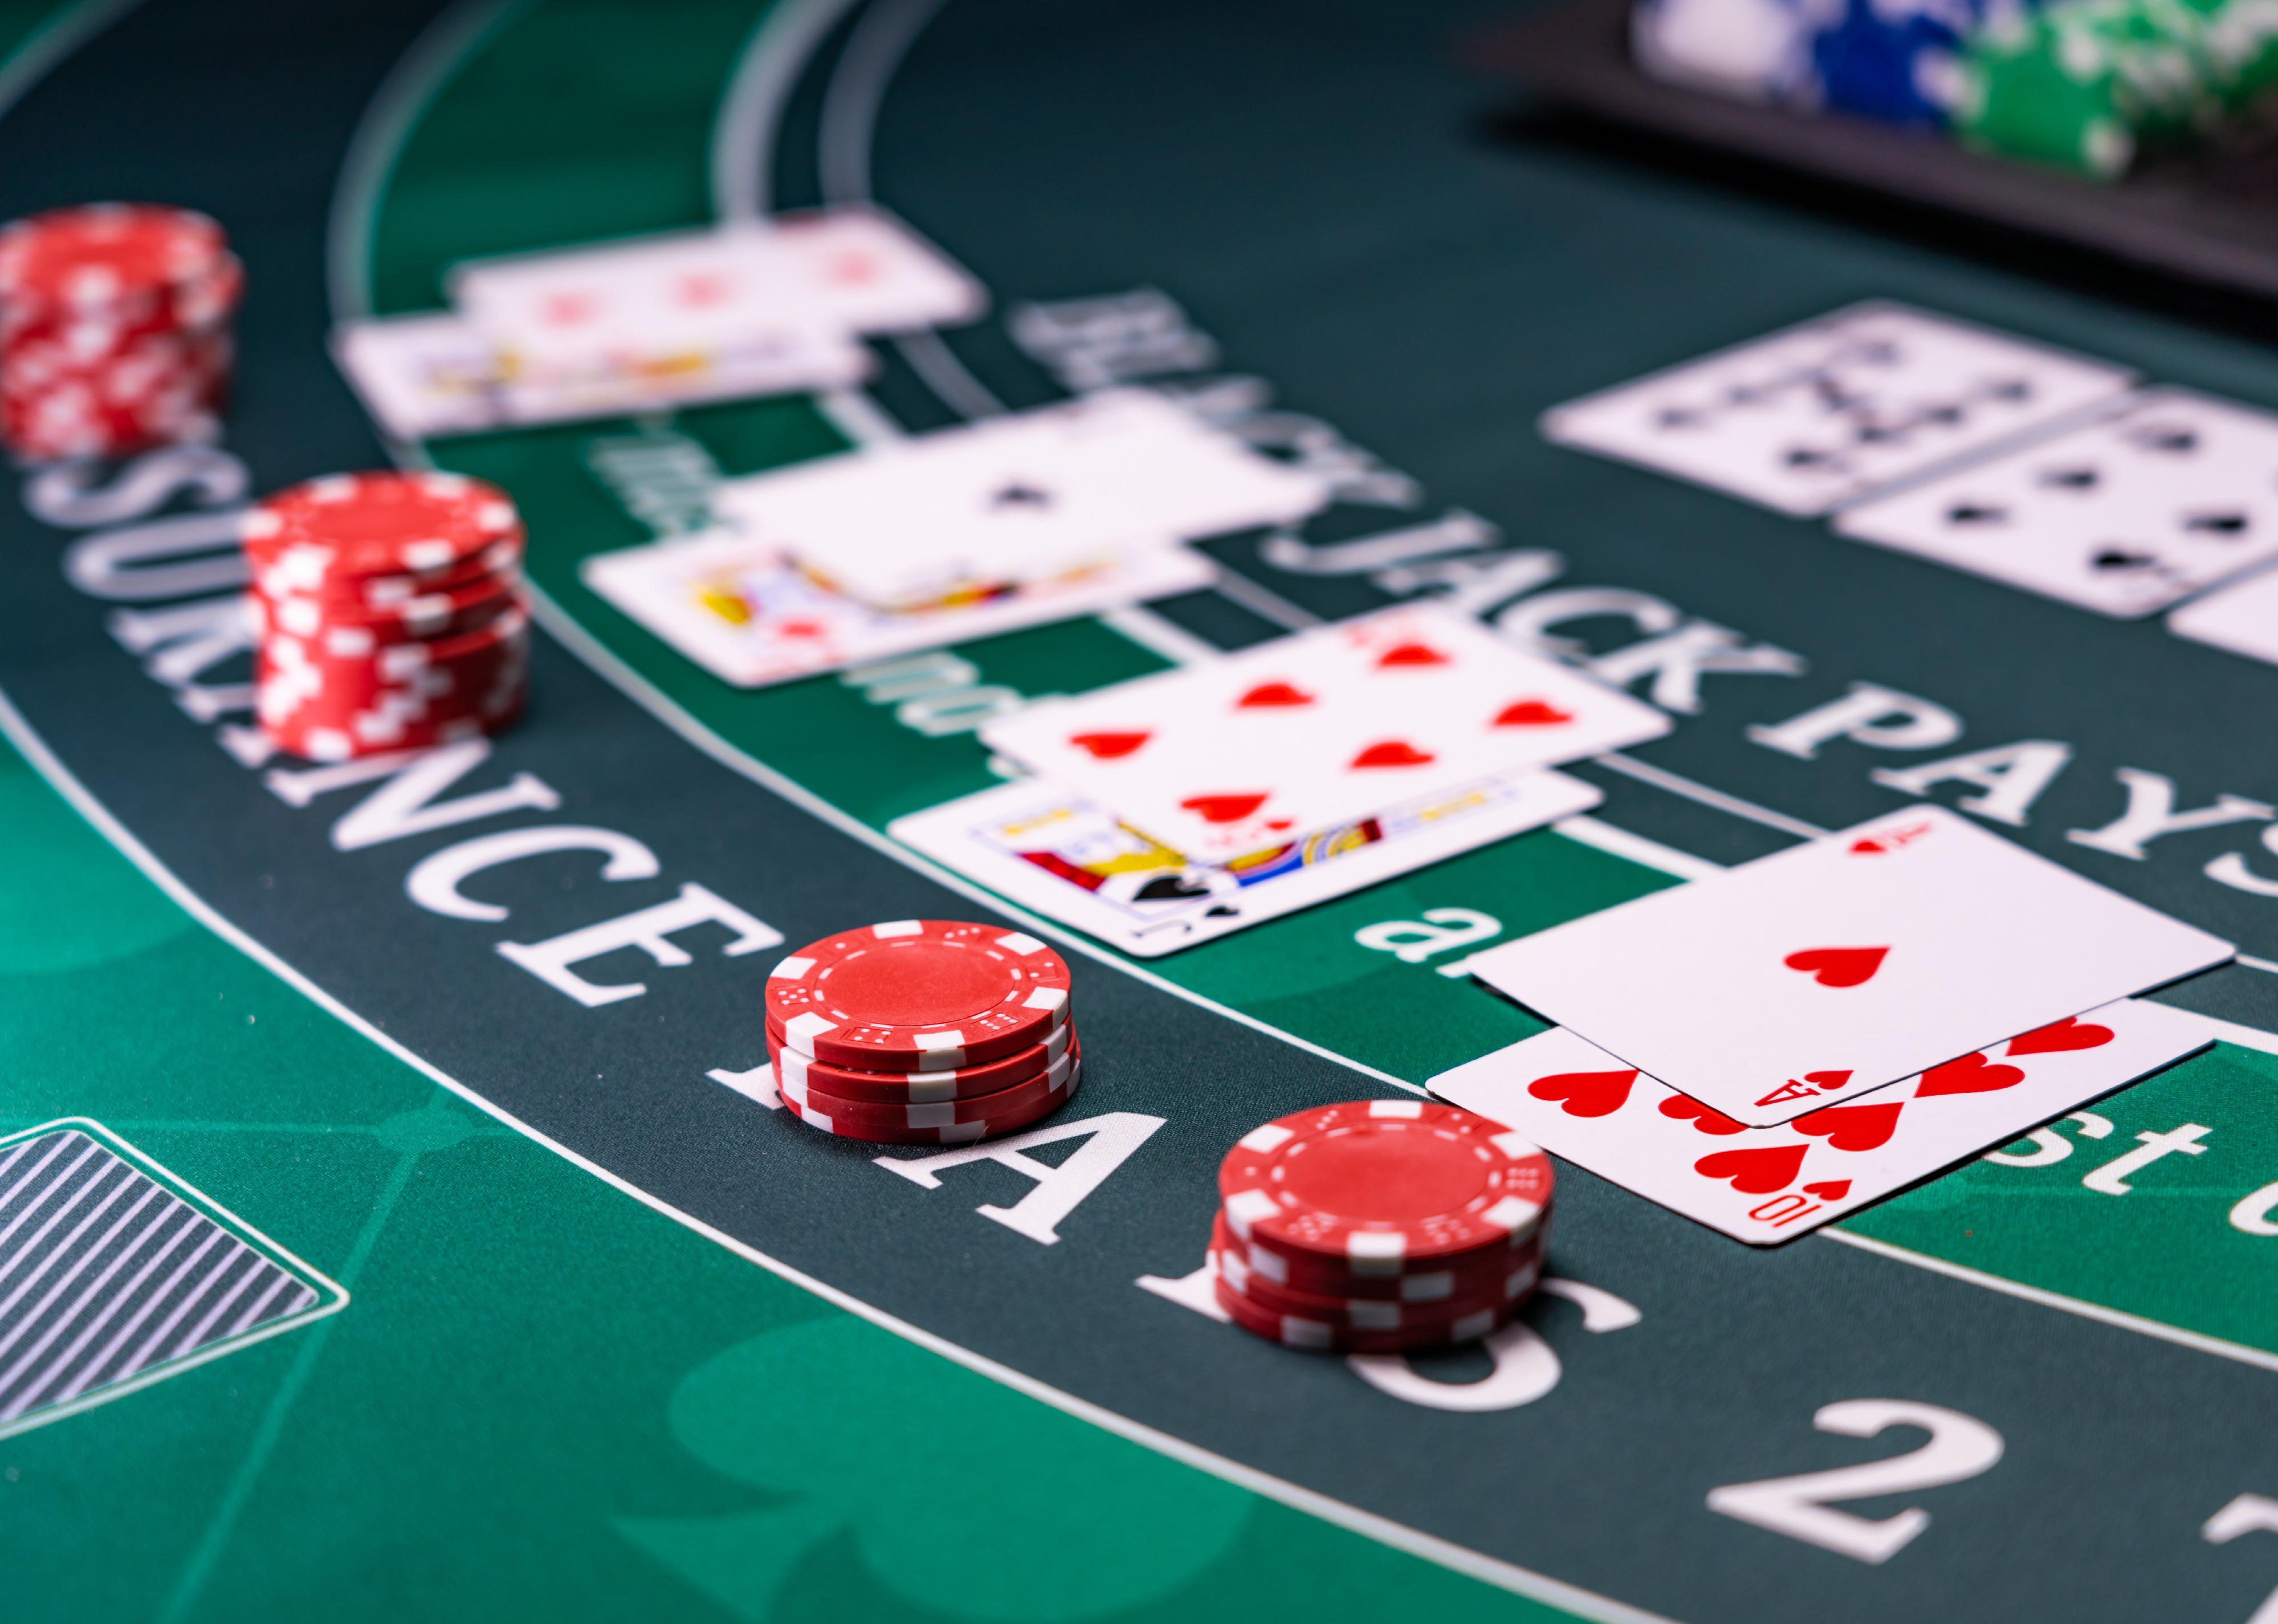 A casino Blackjack table.